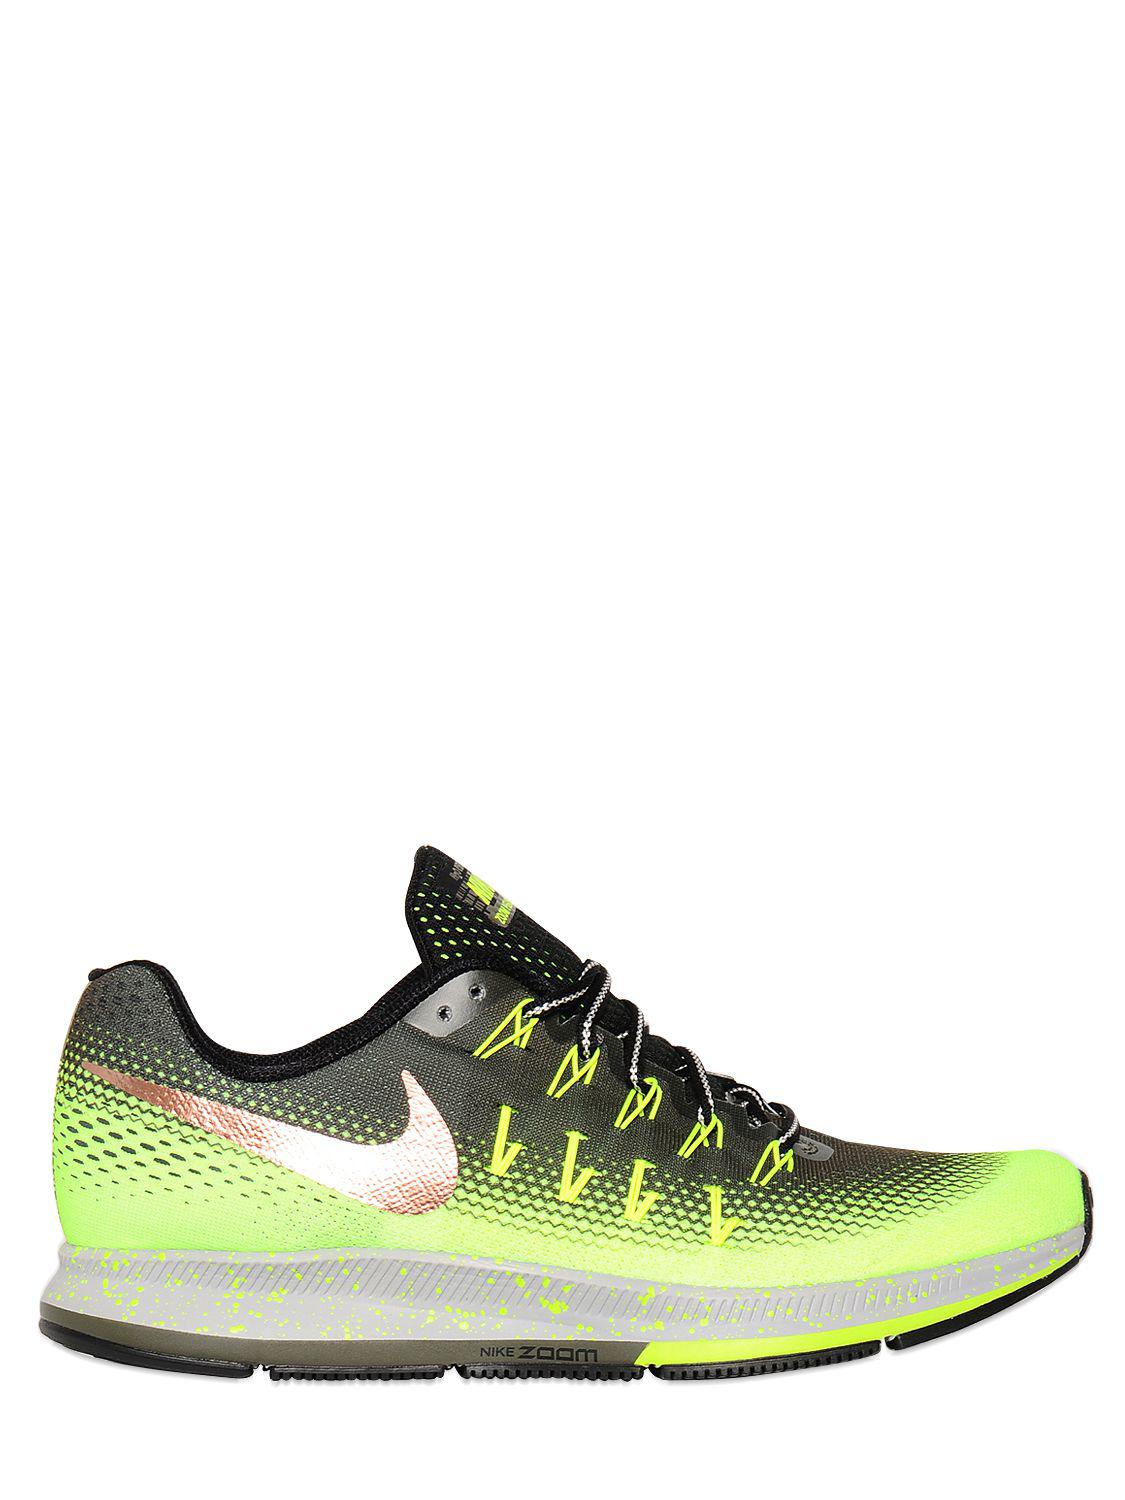 Nike Air Zoom Pegasus 33 Shield Running Shoes in Green/Grey (Green ...